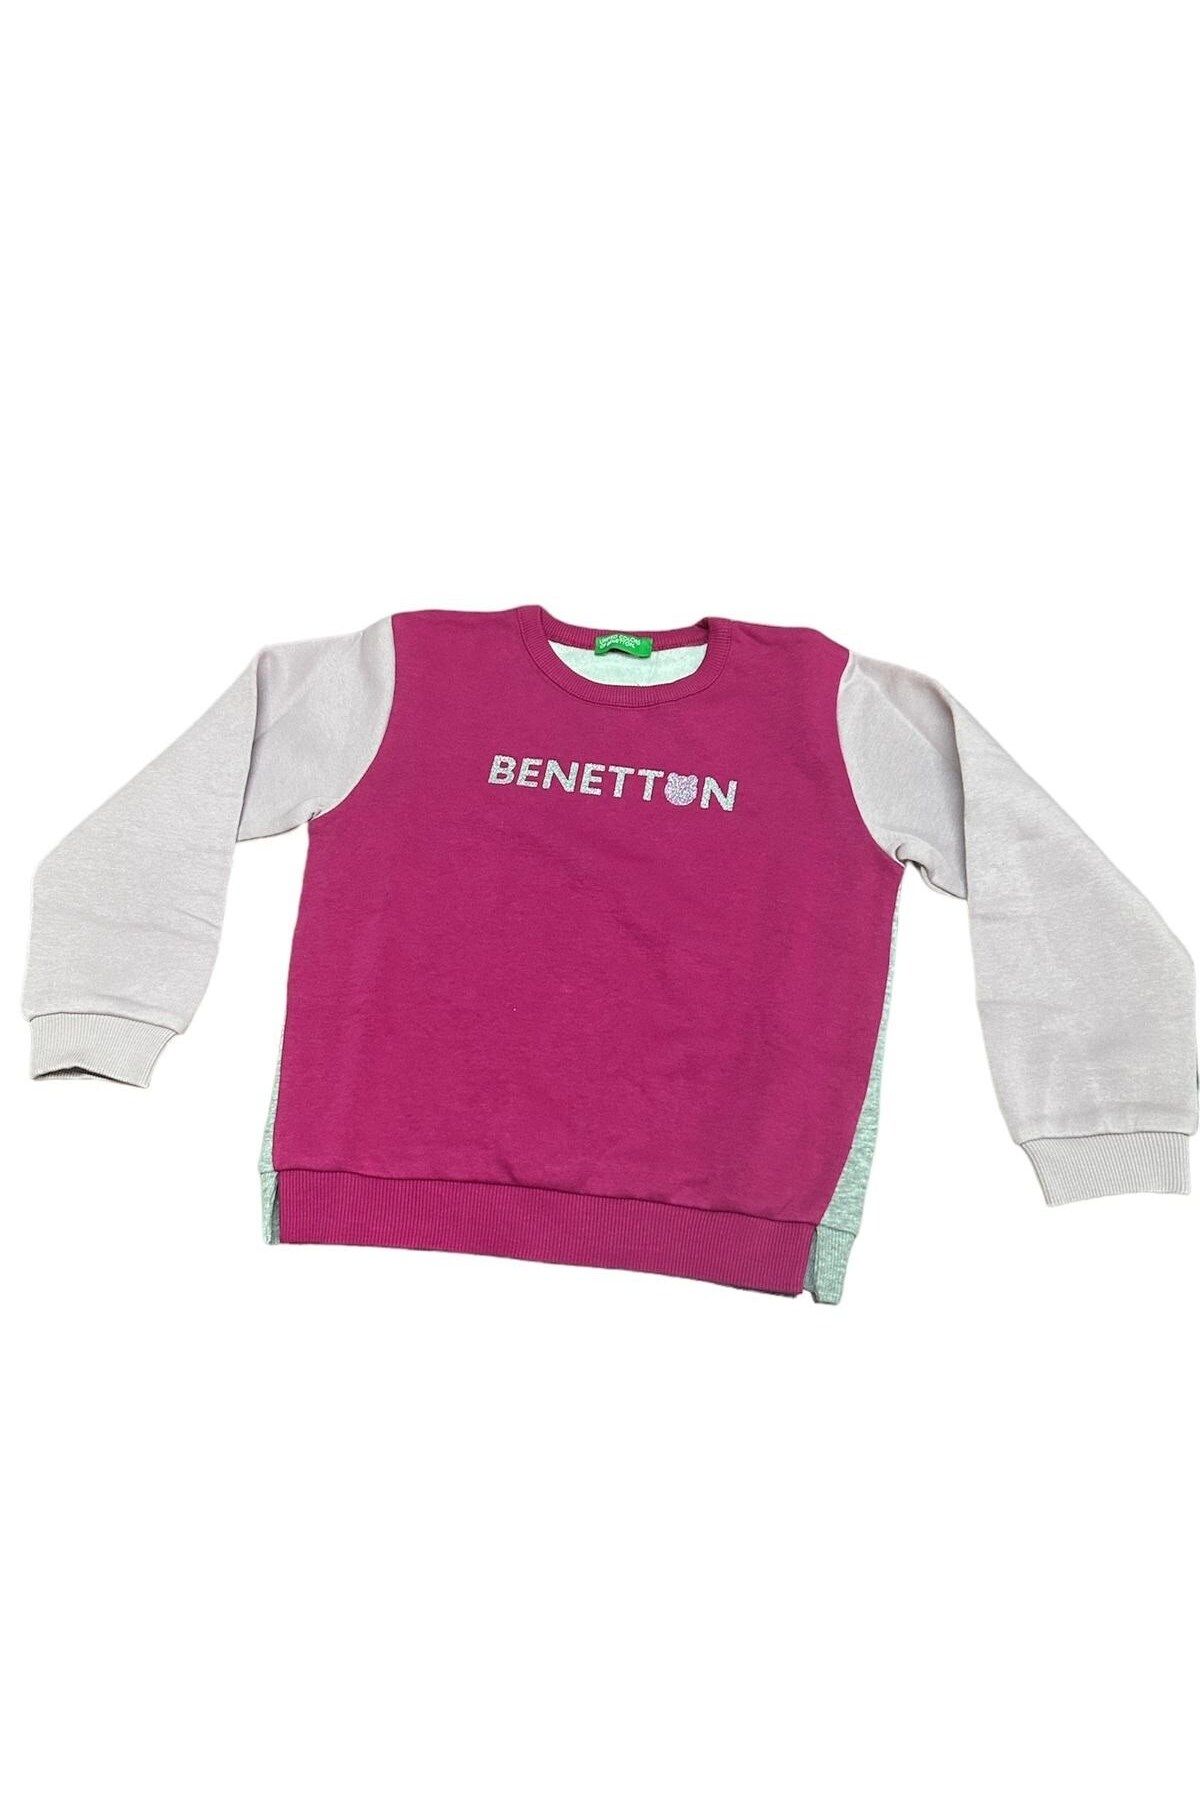 Benetton Çocuk Sweatshirt